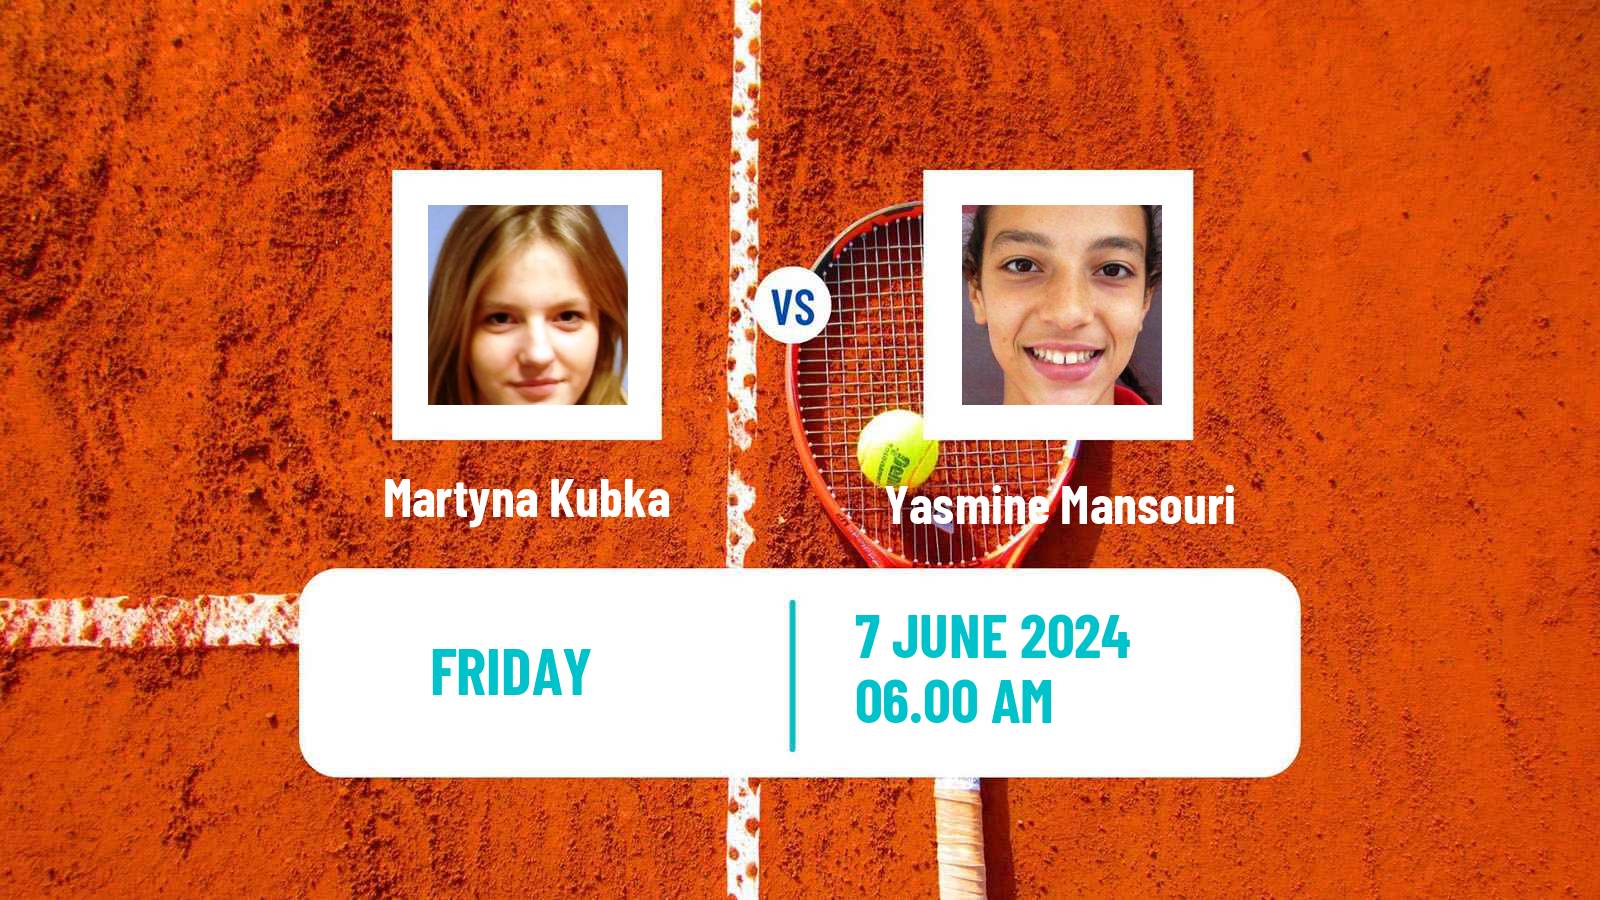 Tennis ITF W50 La Marsa Women Martyna Kubka - Yasmine Mansouri